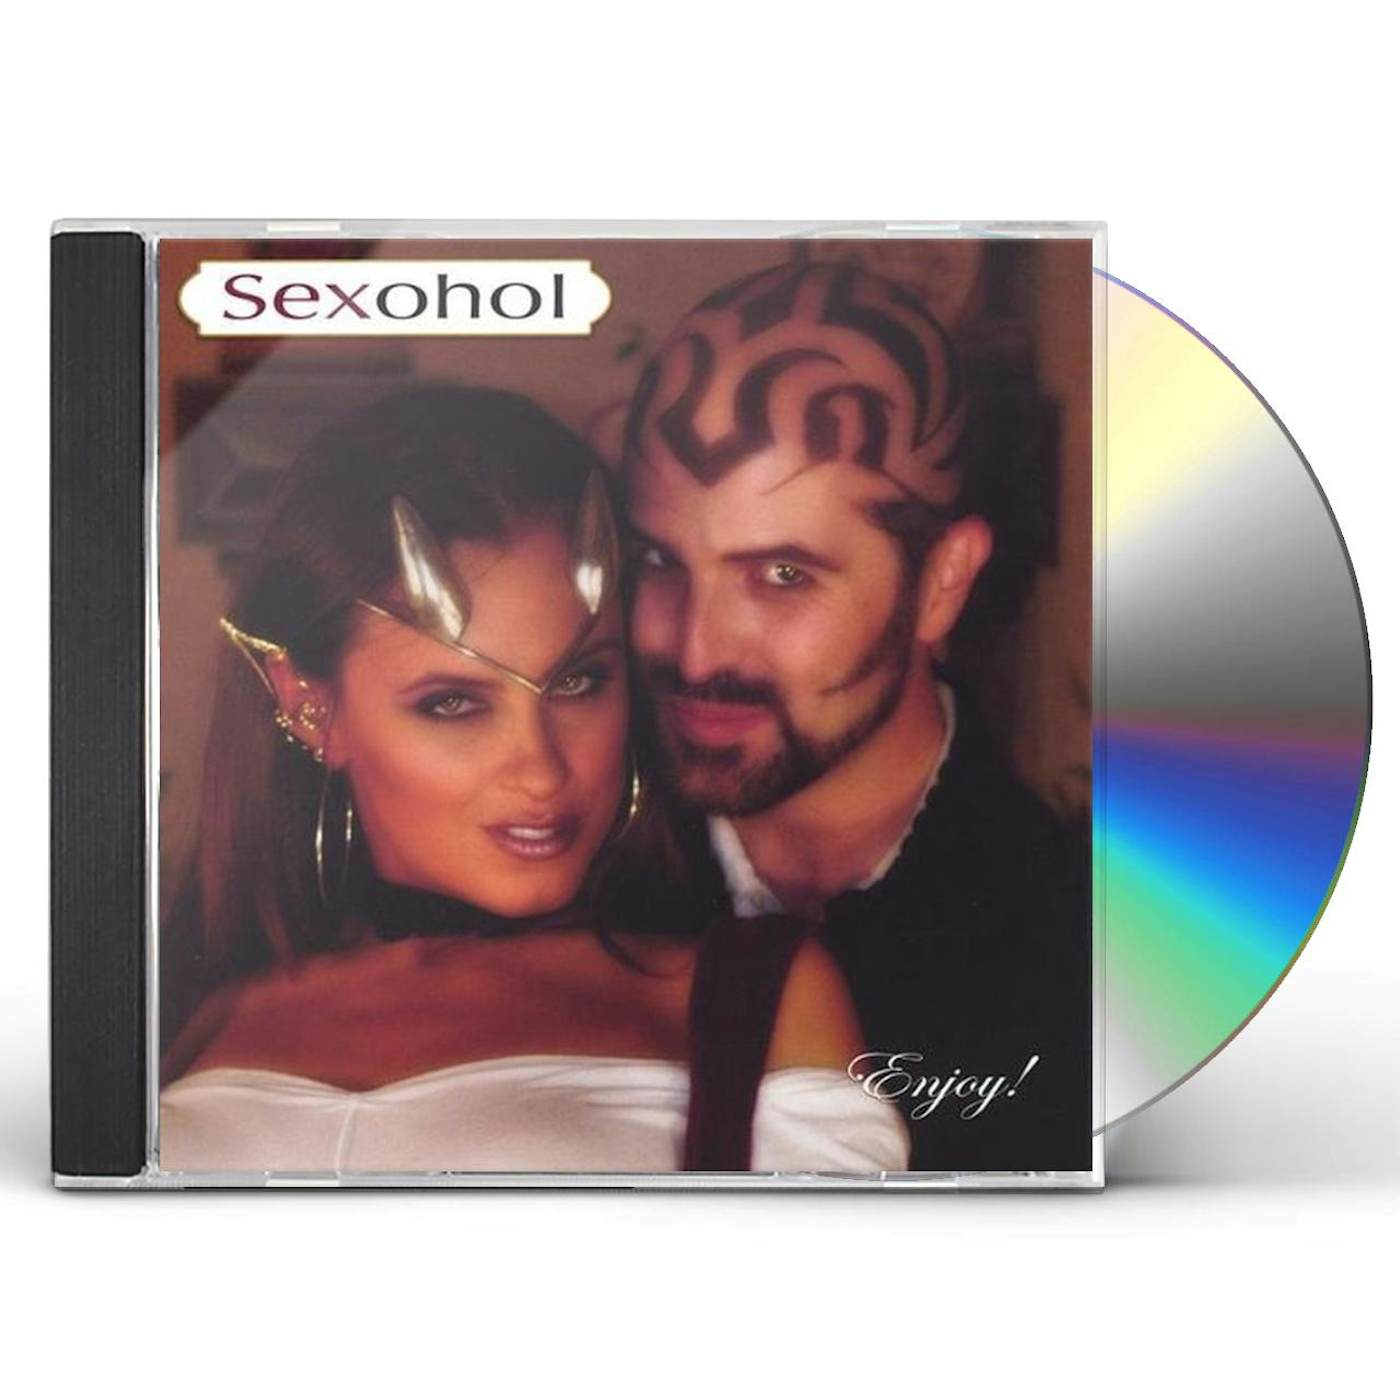 Sexohol ENJOY! CD